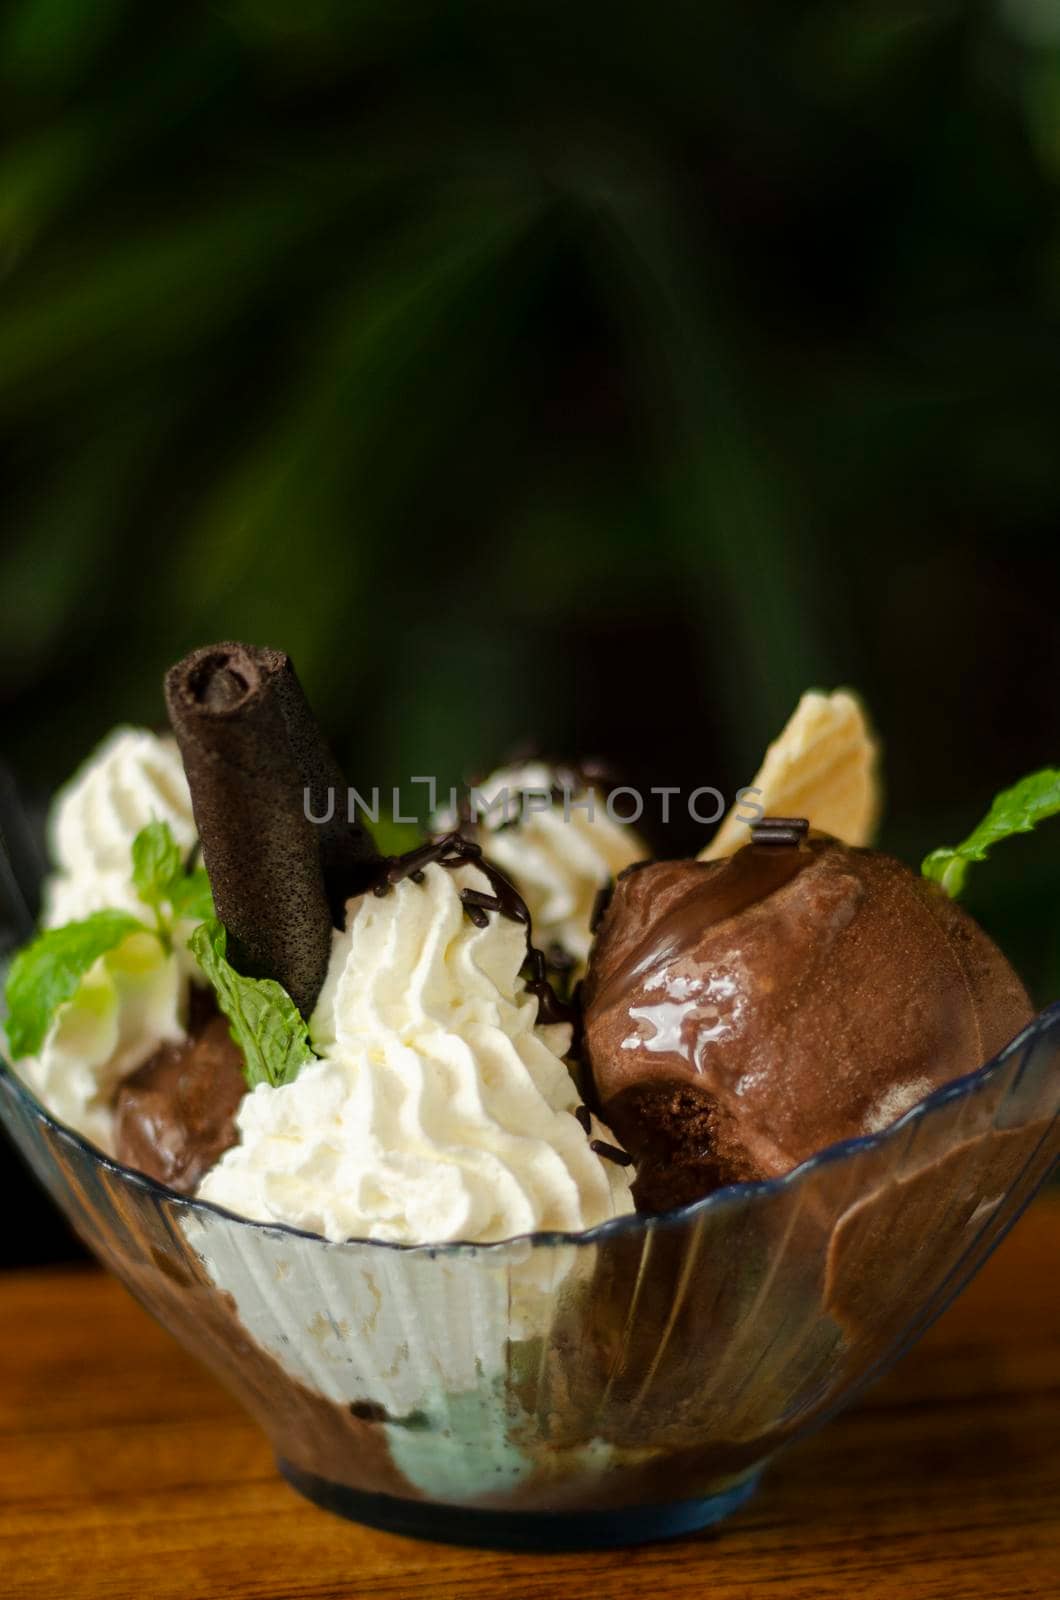 chocolate and mint fresh organic ice cream sundae dessert on wooden table